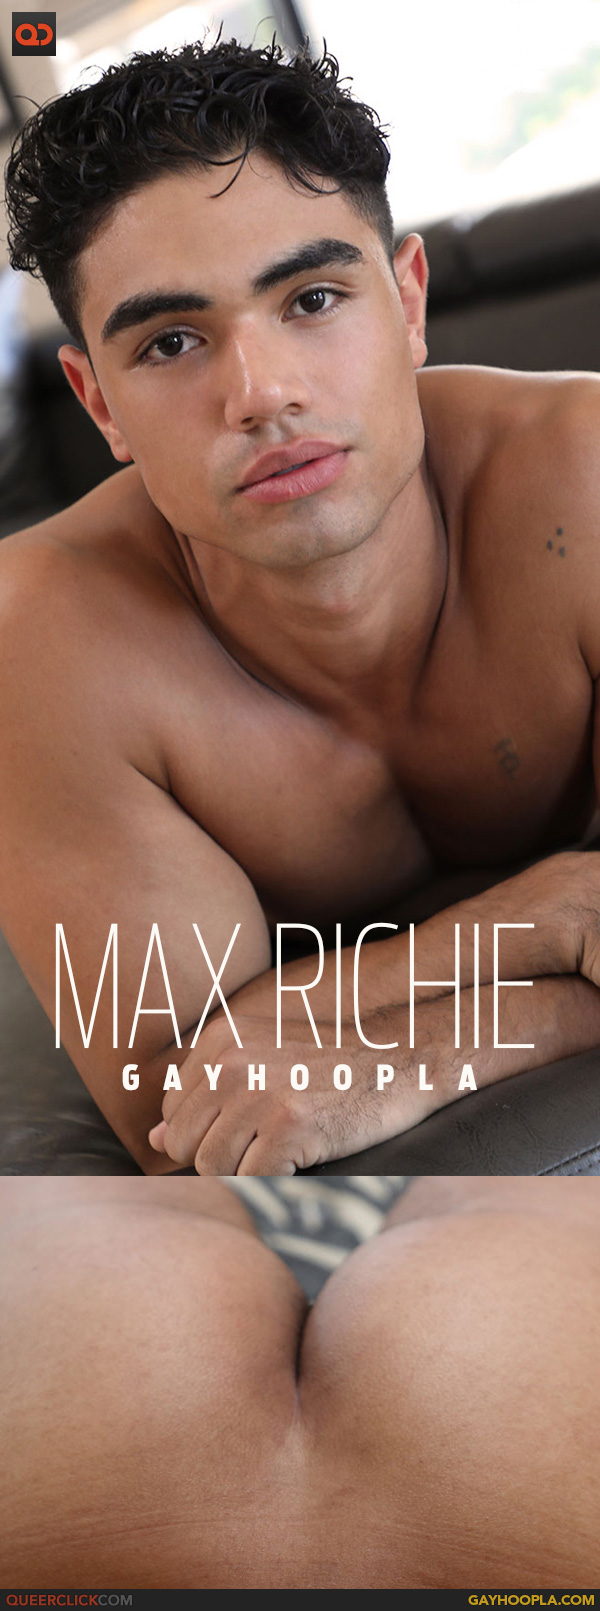 Gayhoopla: Max Richie